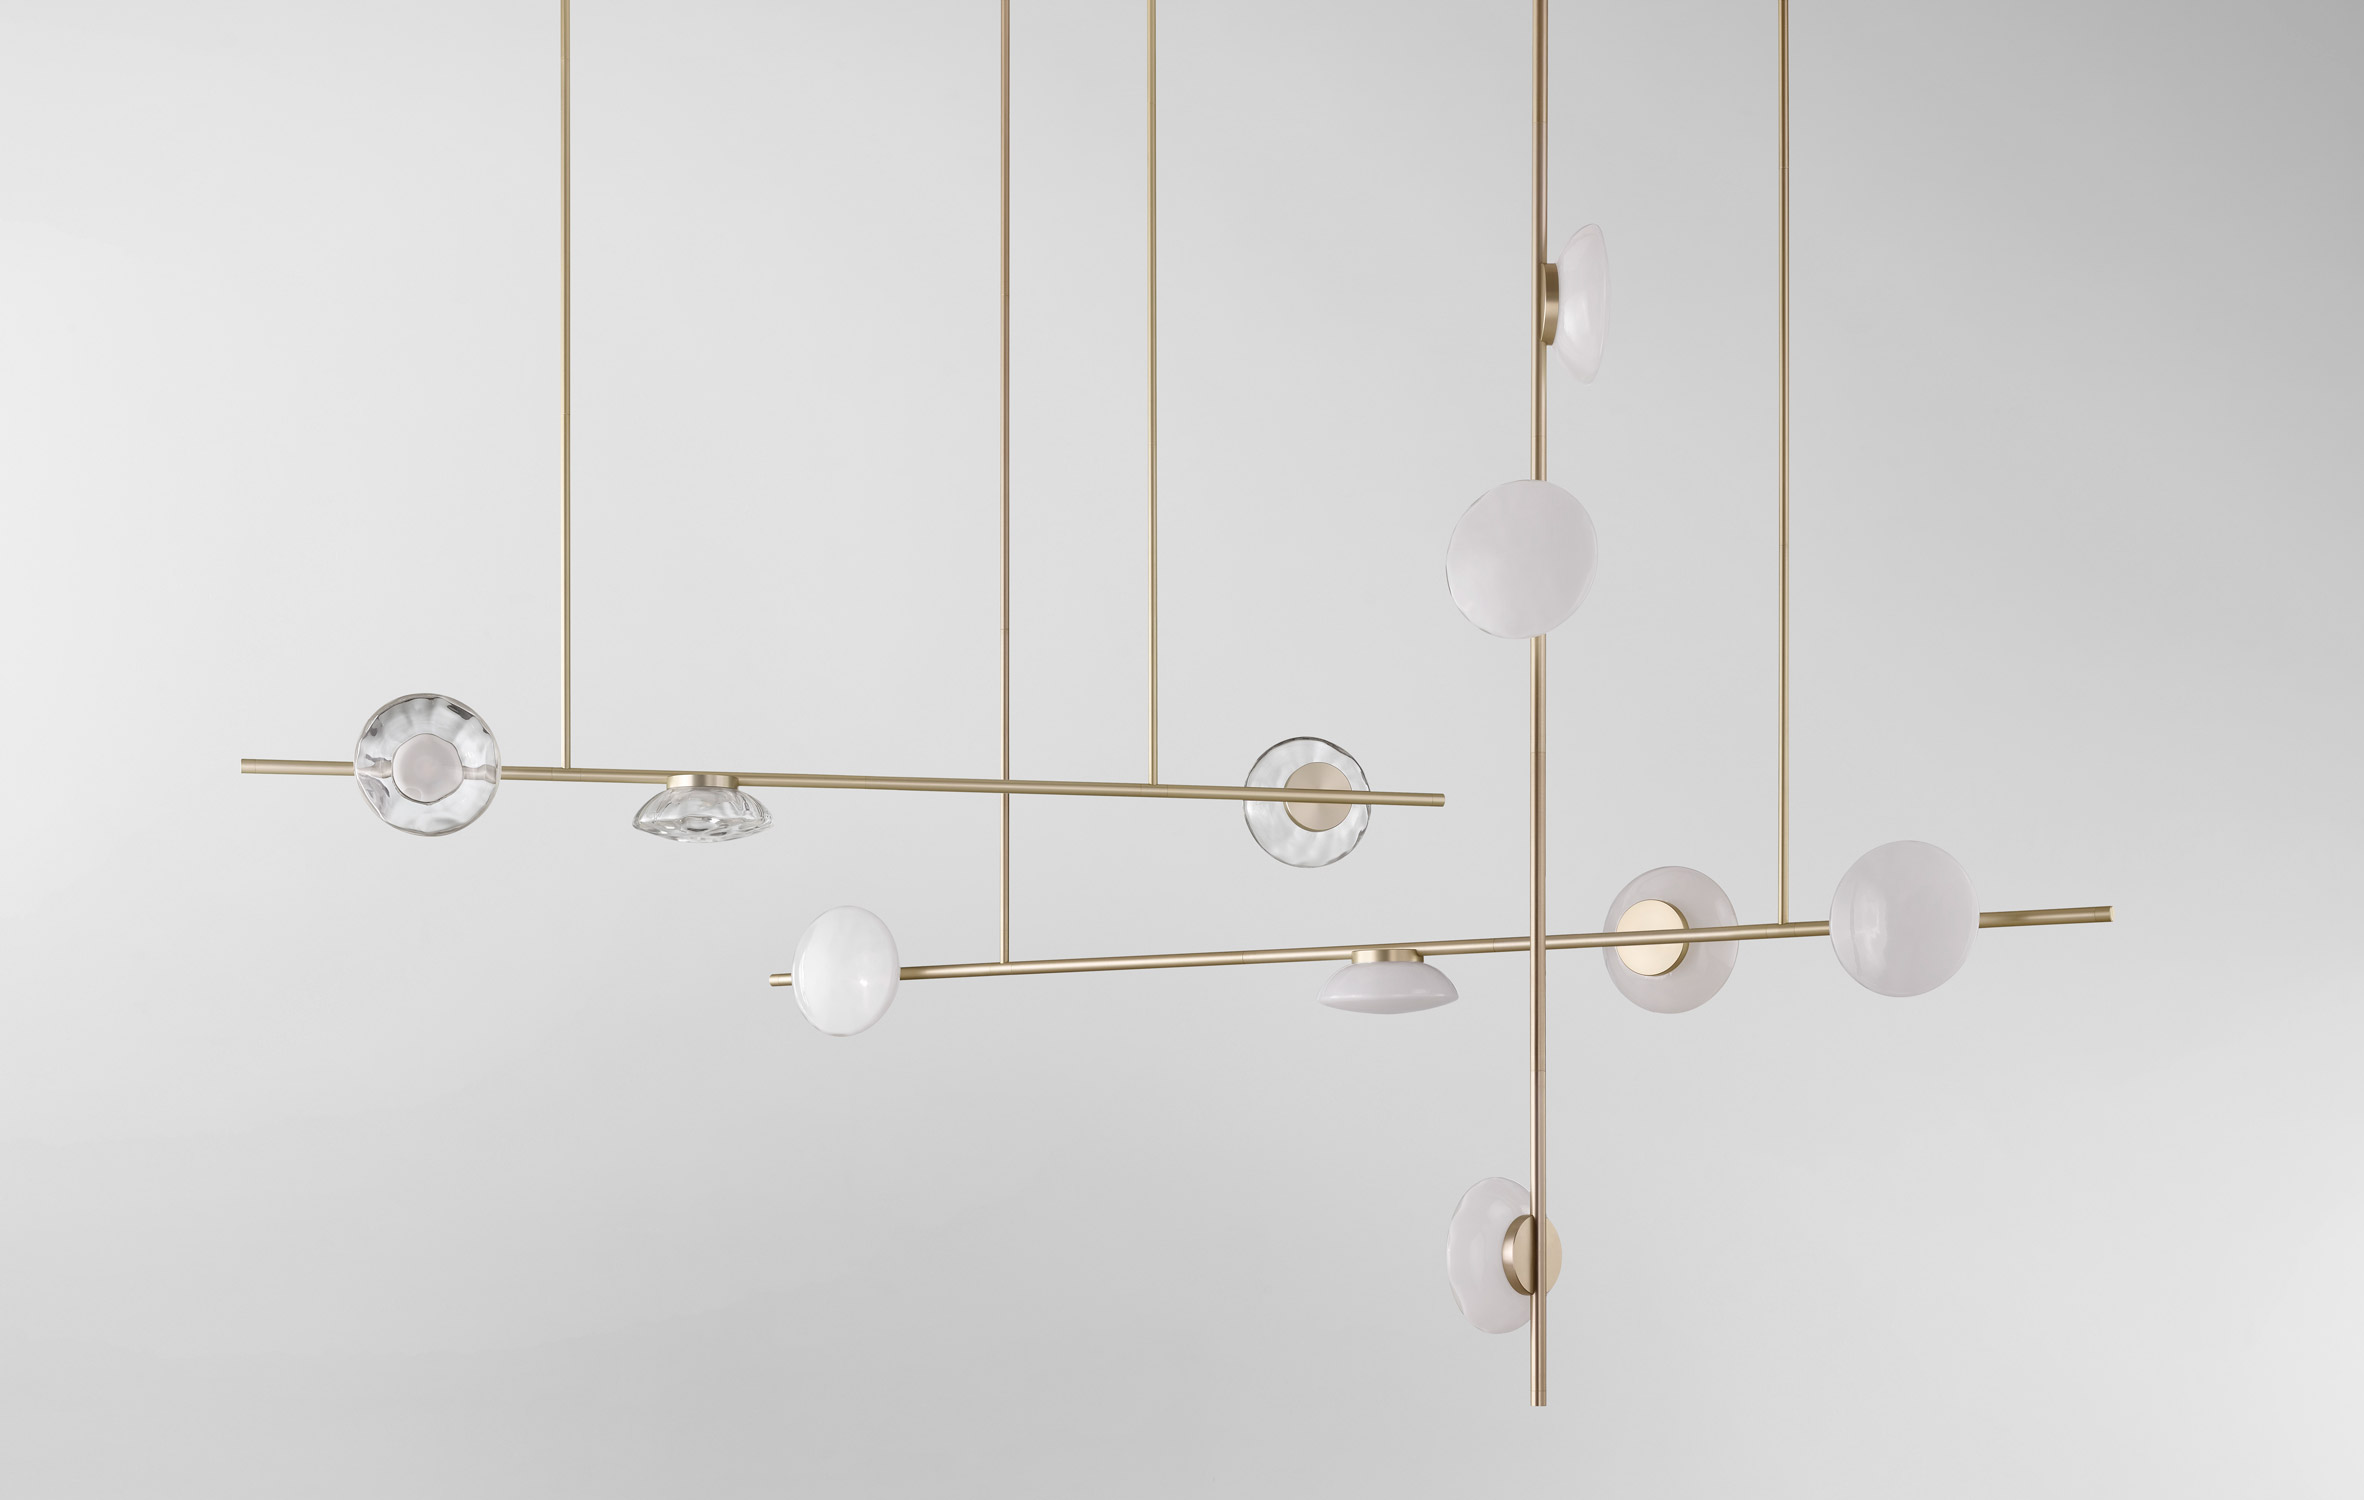 Ceto chandeliers by Ross Gardam